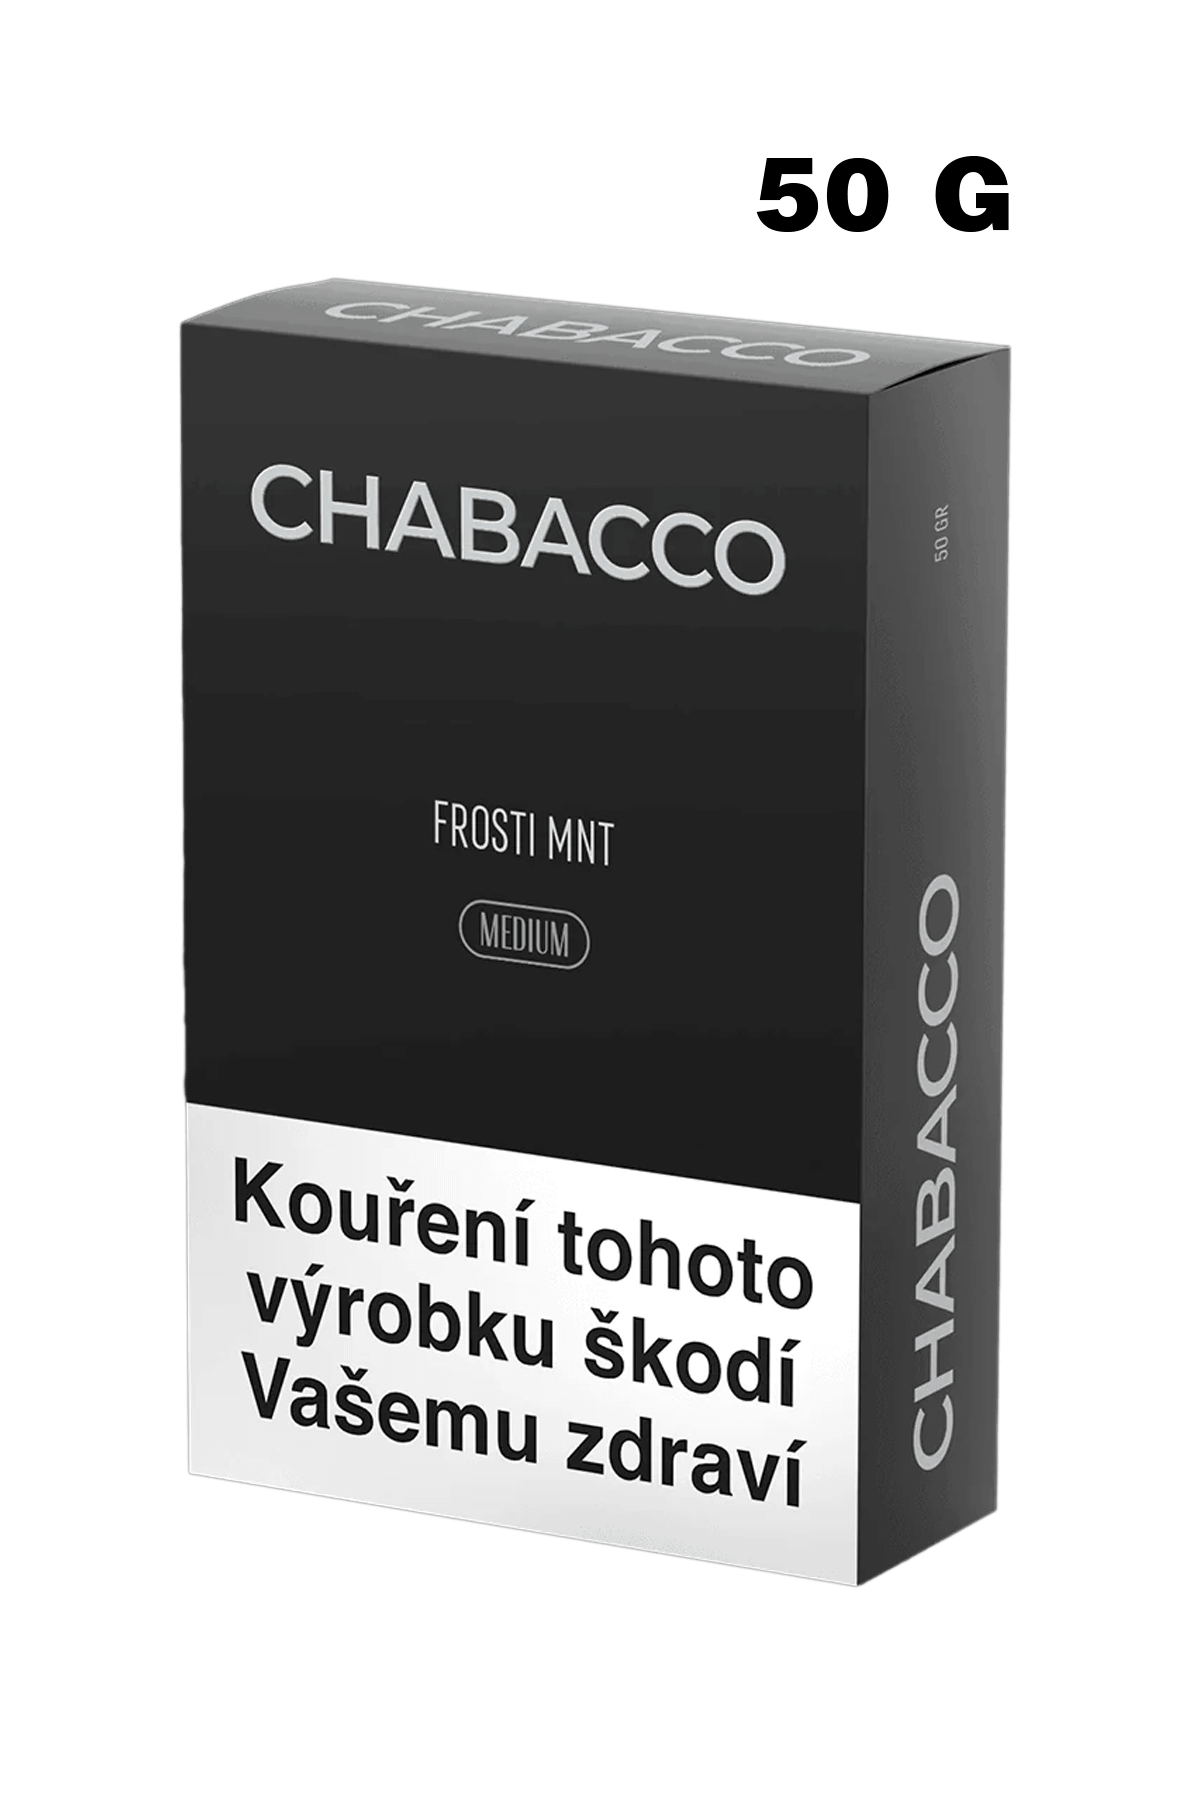 Tobacco - Chabacco Medium 50g - Frosti Mnt